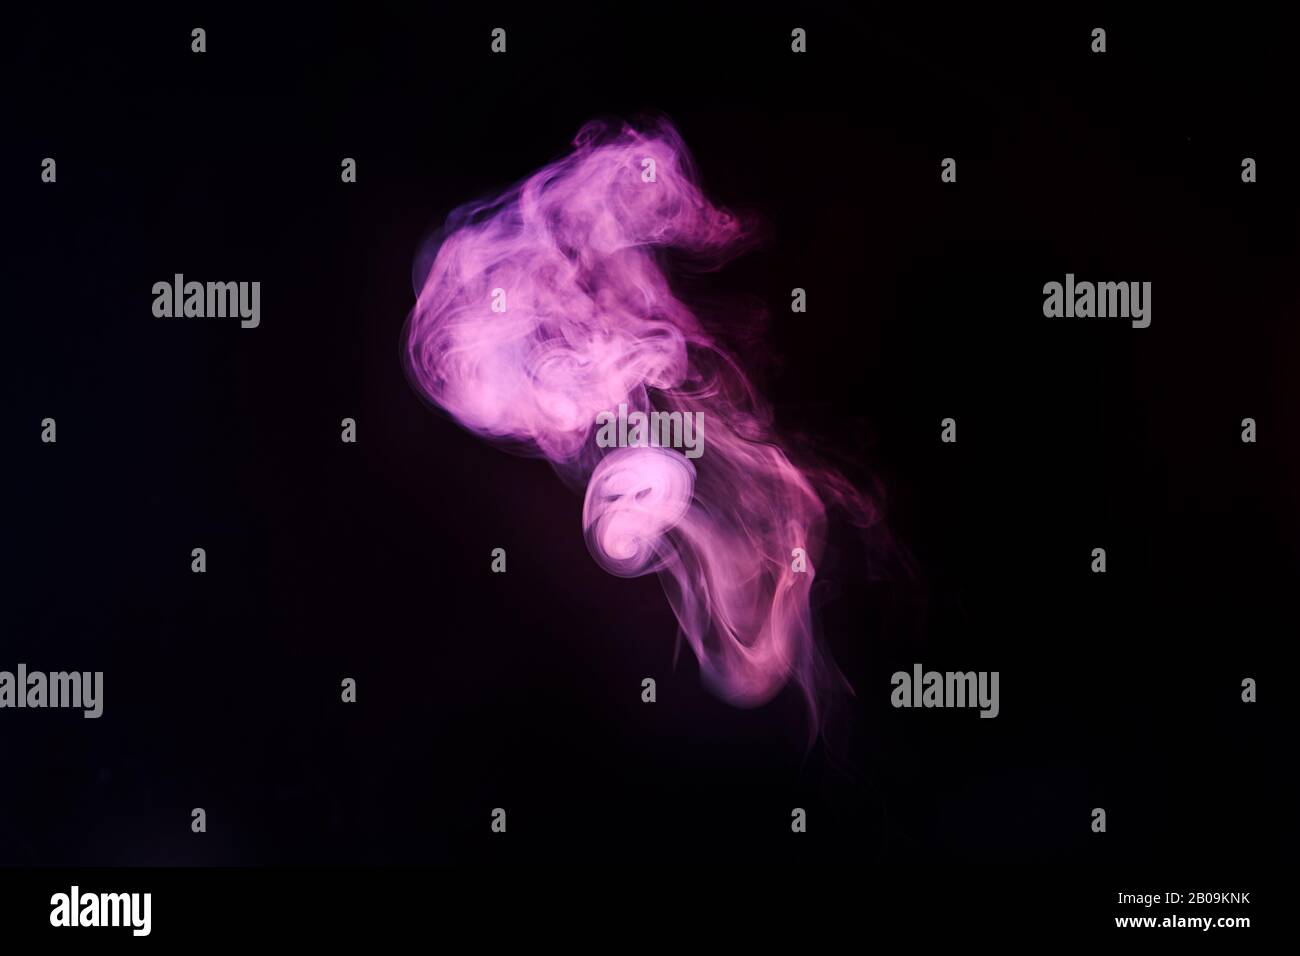 Abstract neon light smoke effect on black background. Smoke cloud explosion. Stock Photo